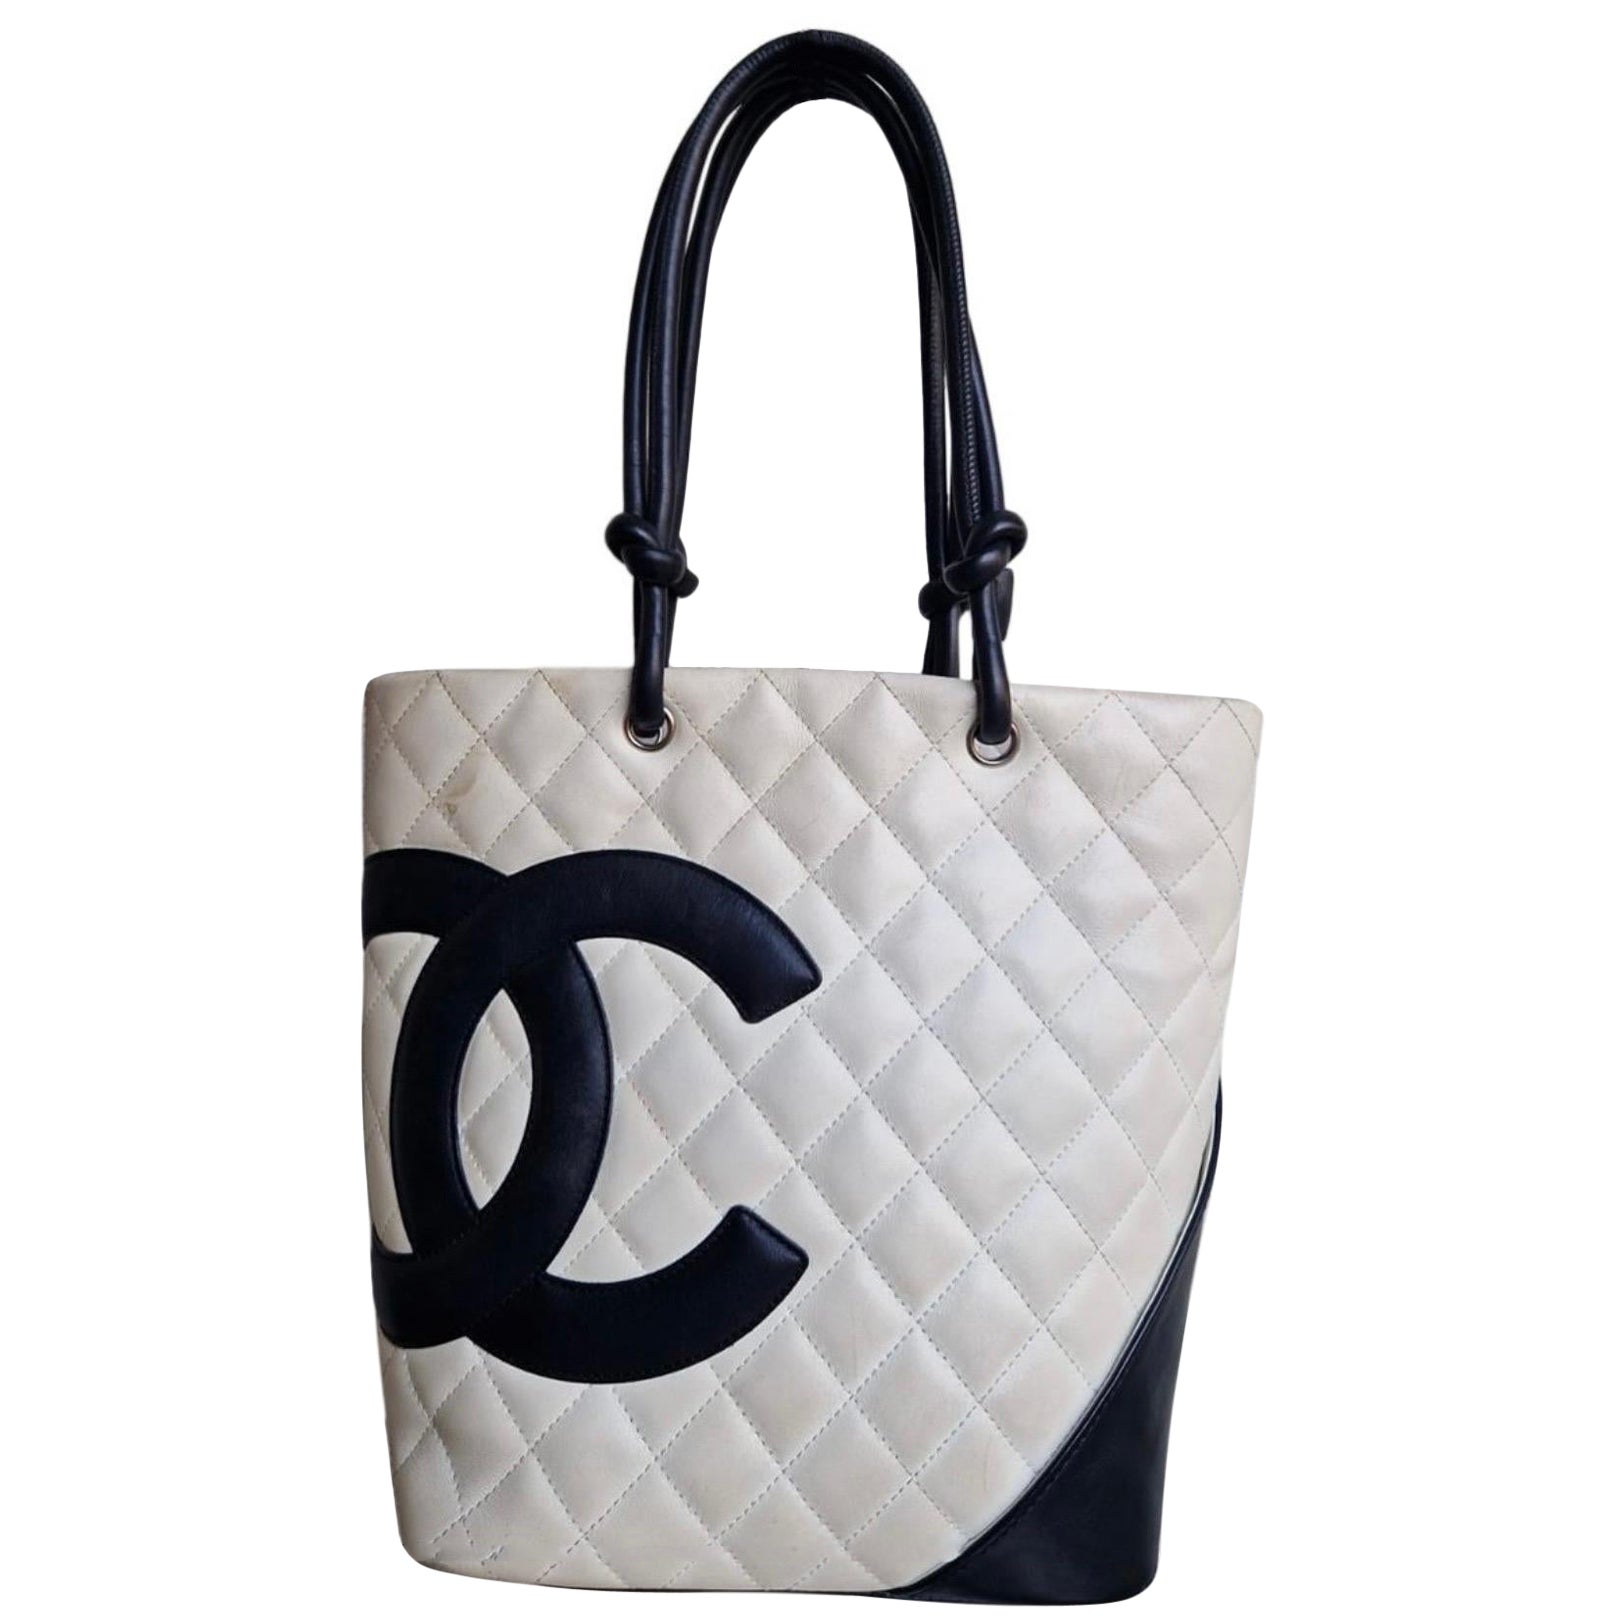 Chanel Cambon white and Black CC Bag